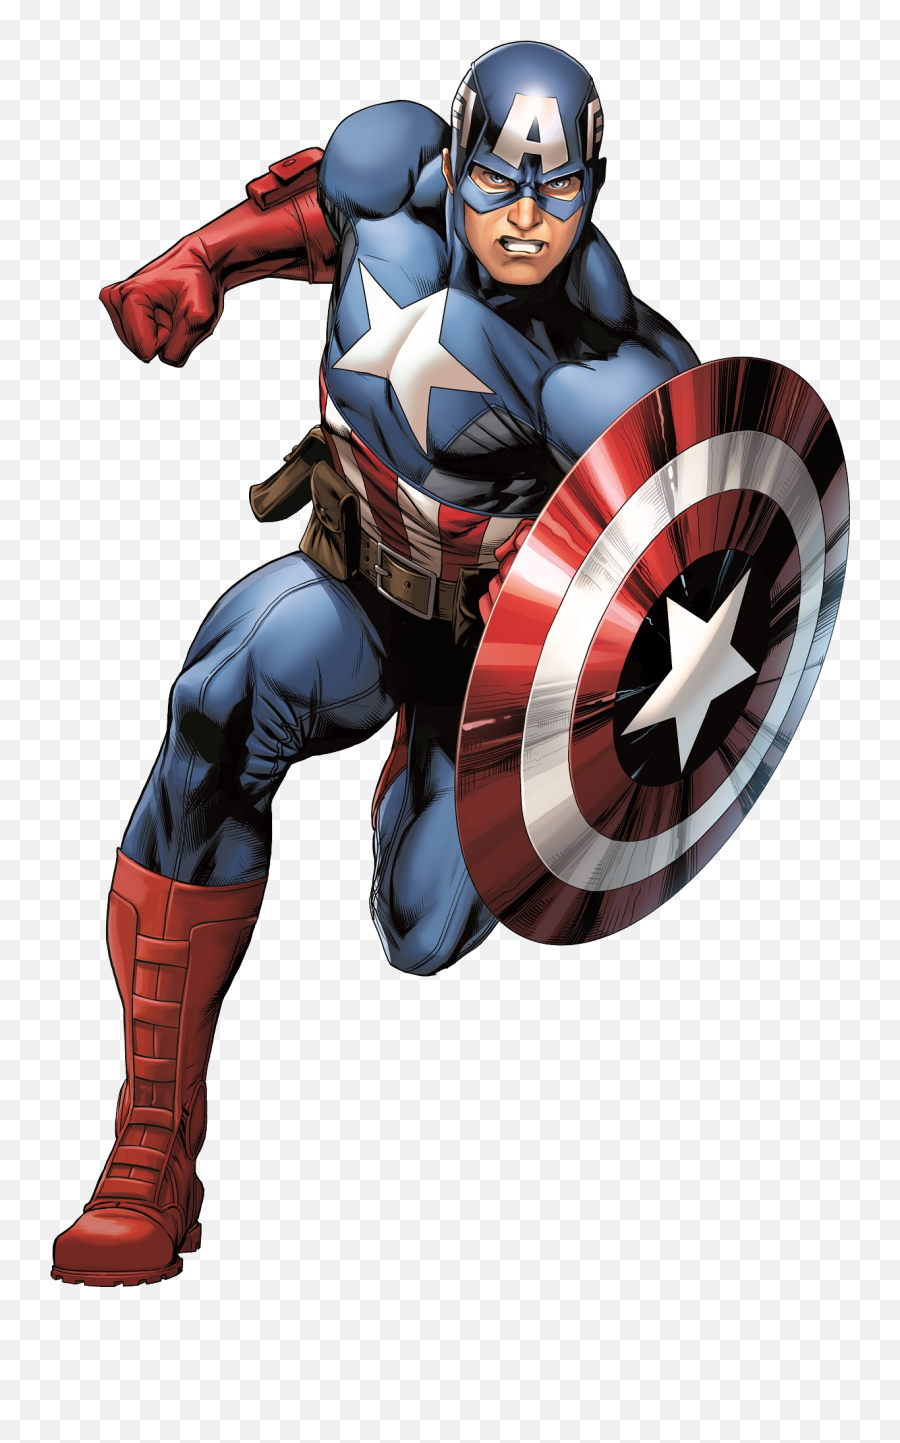 Captain America Png Image - Captain America,Captain America Transparent Background